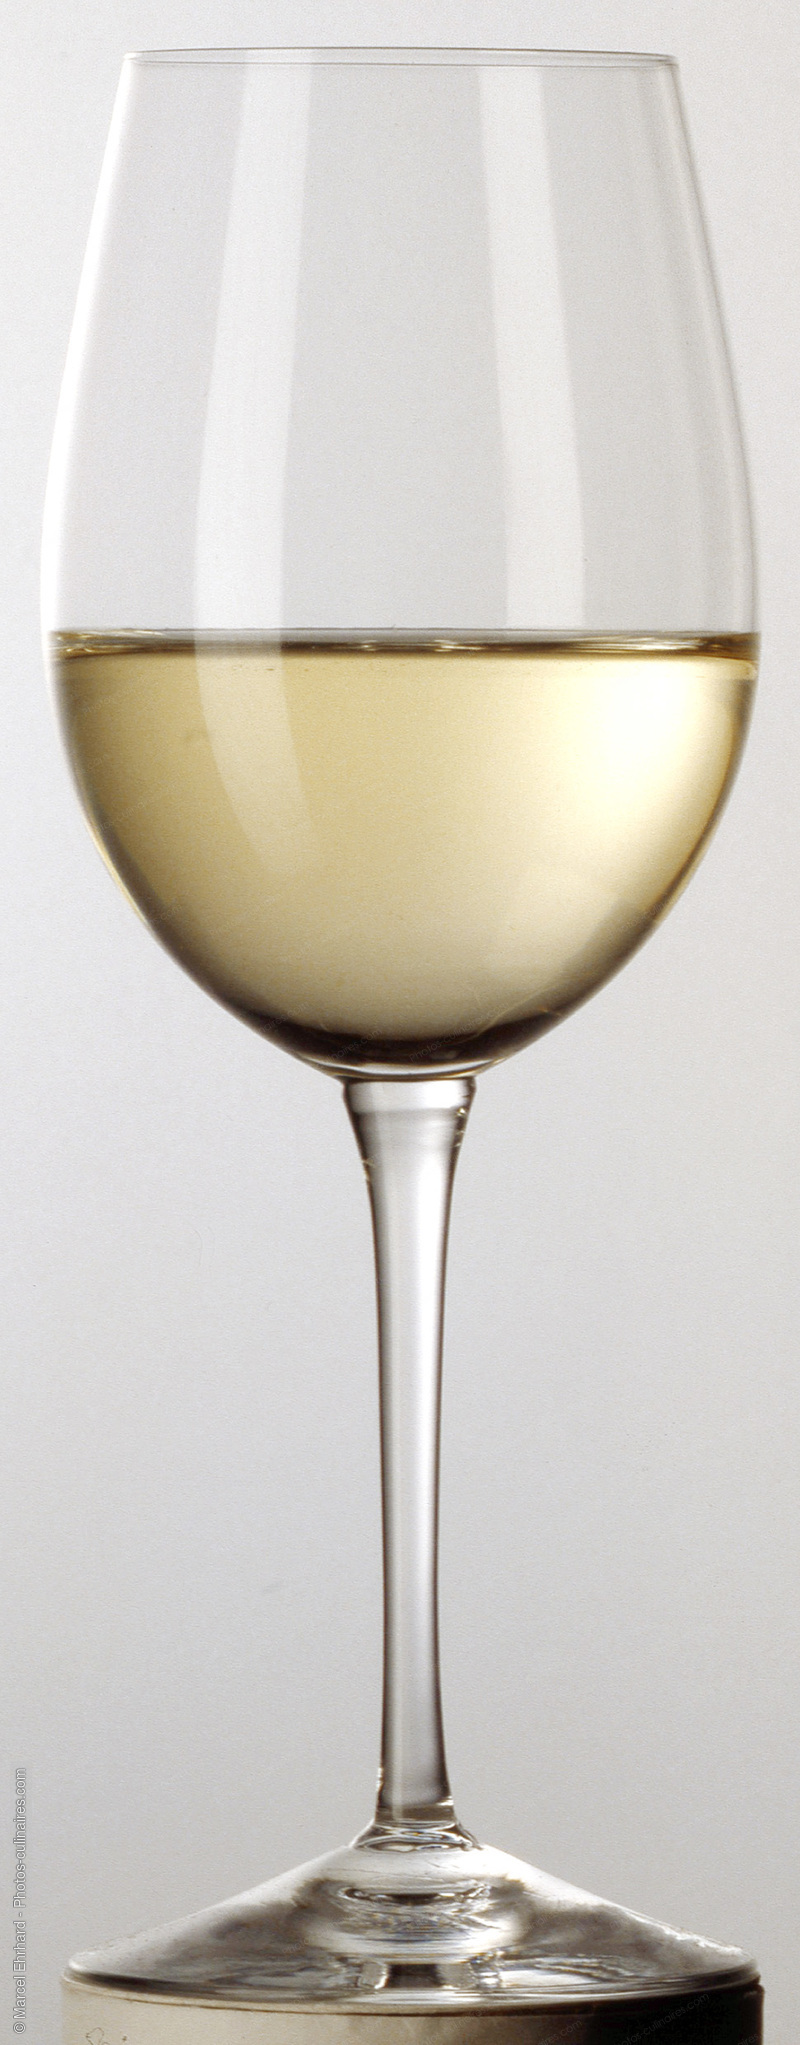 Verre de vin blanc - photo référence BO41.jpg